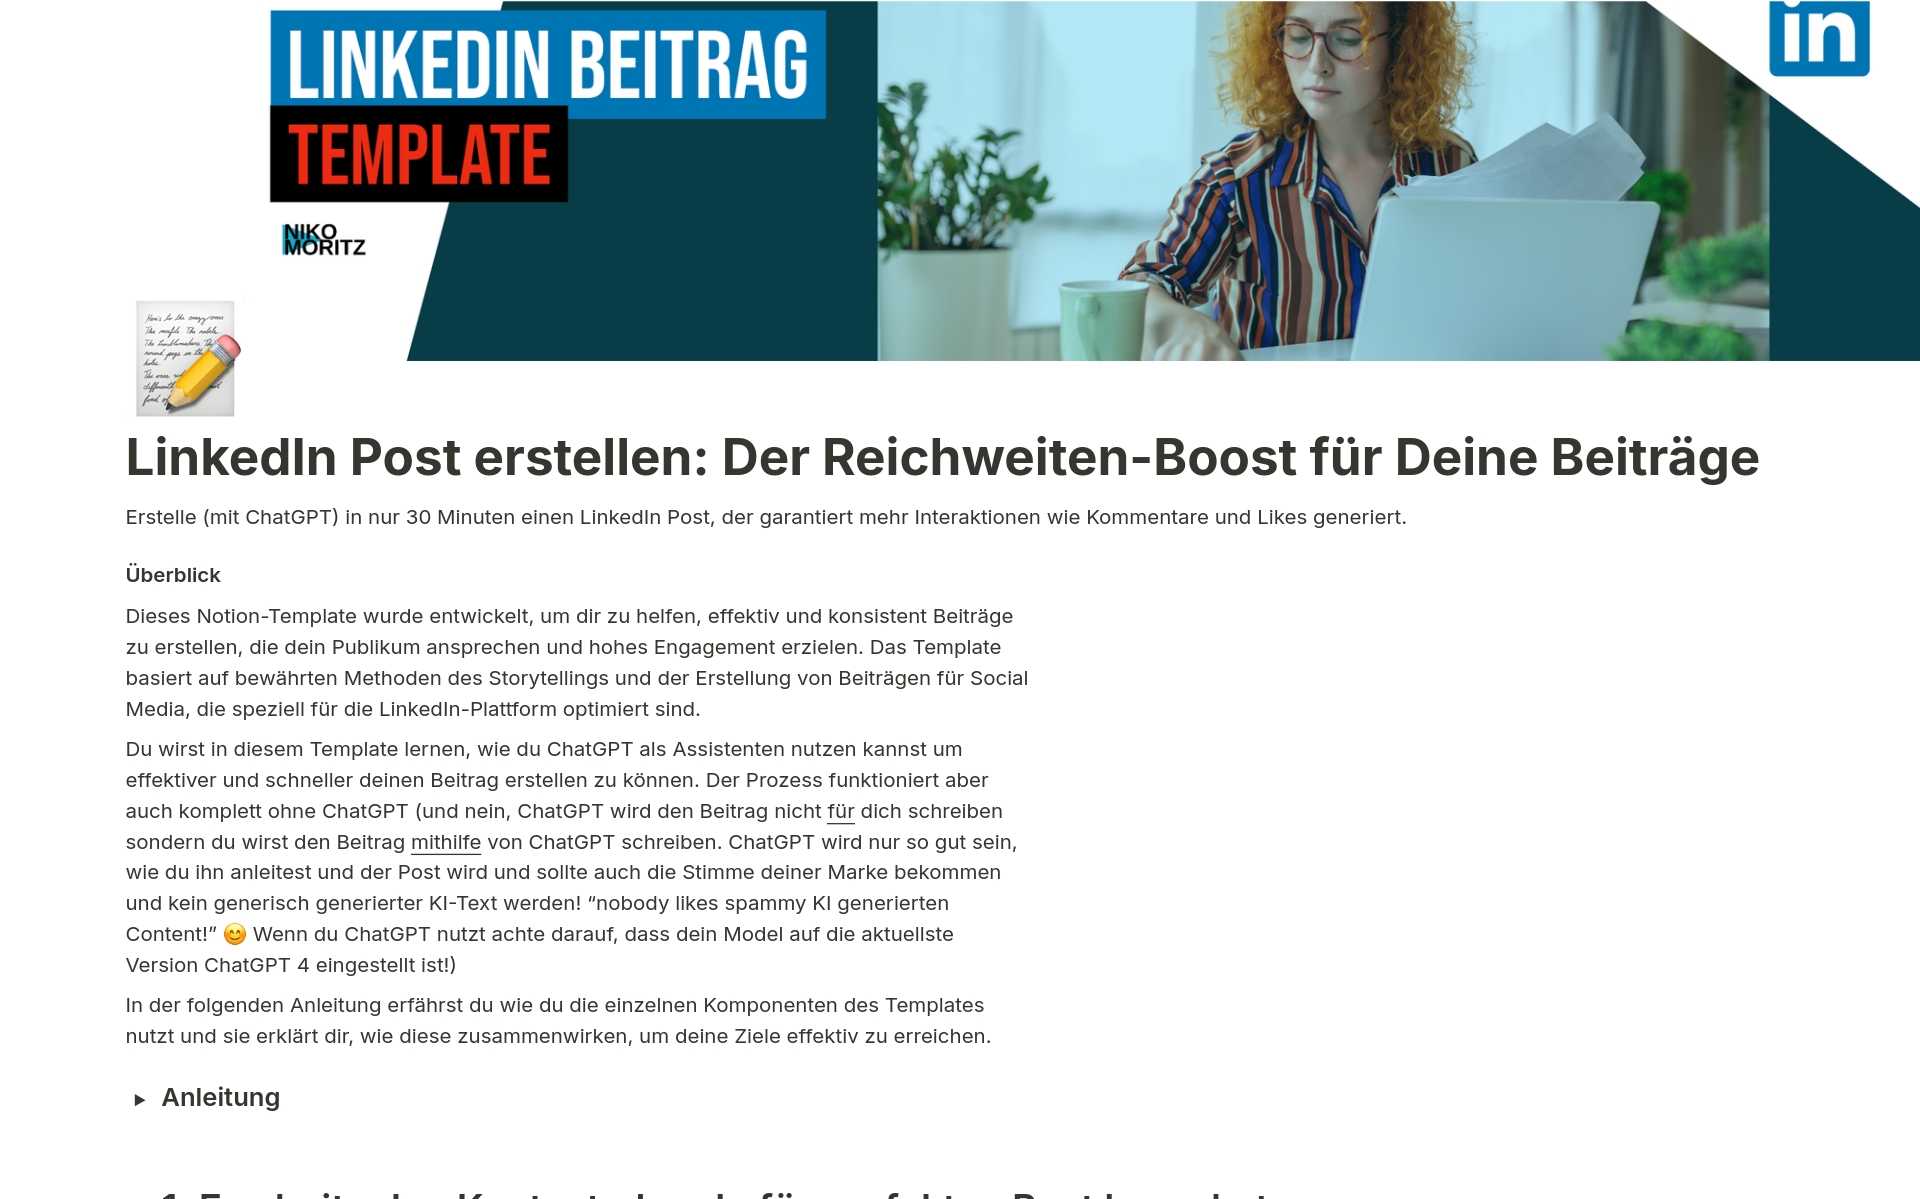 LinkedIn Post Reichweiten Boostのテンプレートのプレビュー